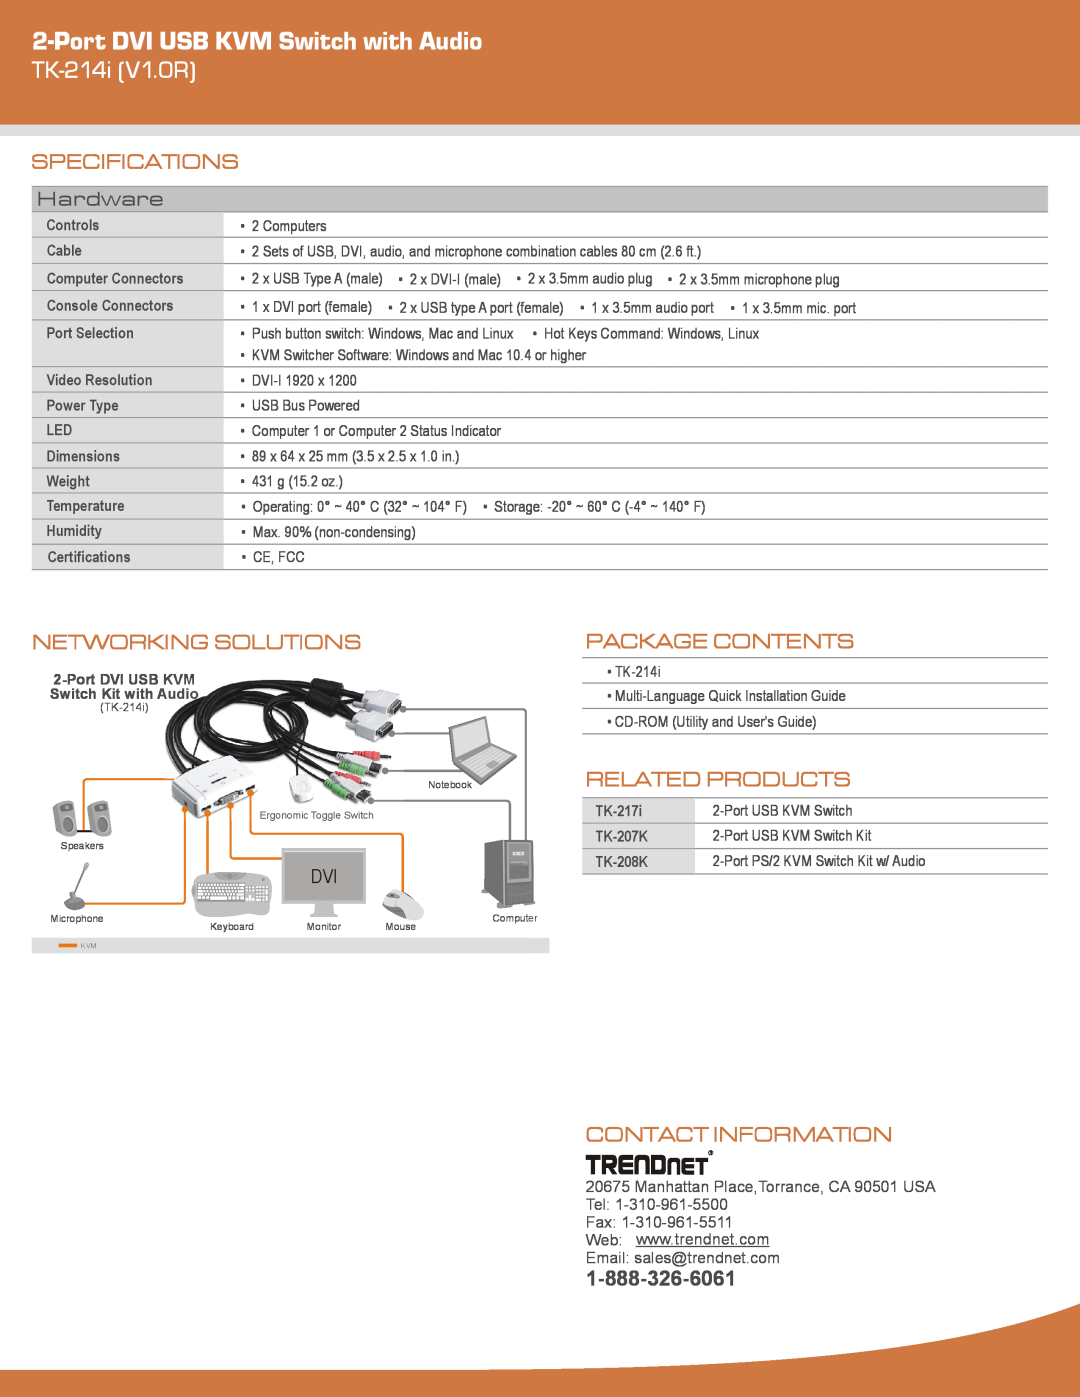 TRENDnet TK214i Port DVI USB KVM Switch with Audio, TK-214i V1.0R, Specifications, Hardware, Networking Solutions 